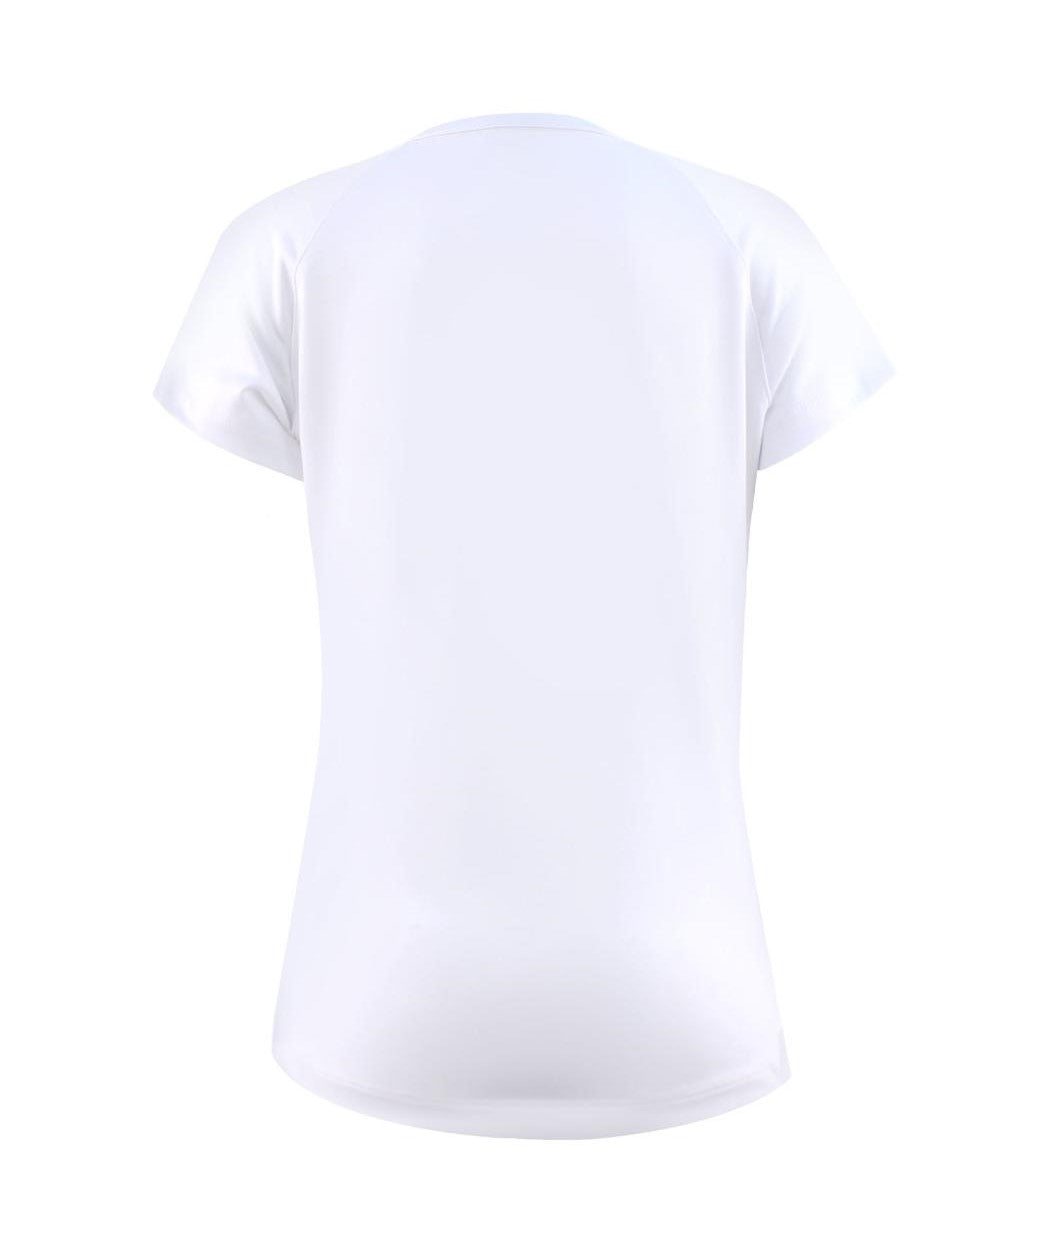 Chamonix White Short Sleeve Top - New! - Little Miss Tennis